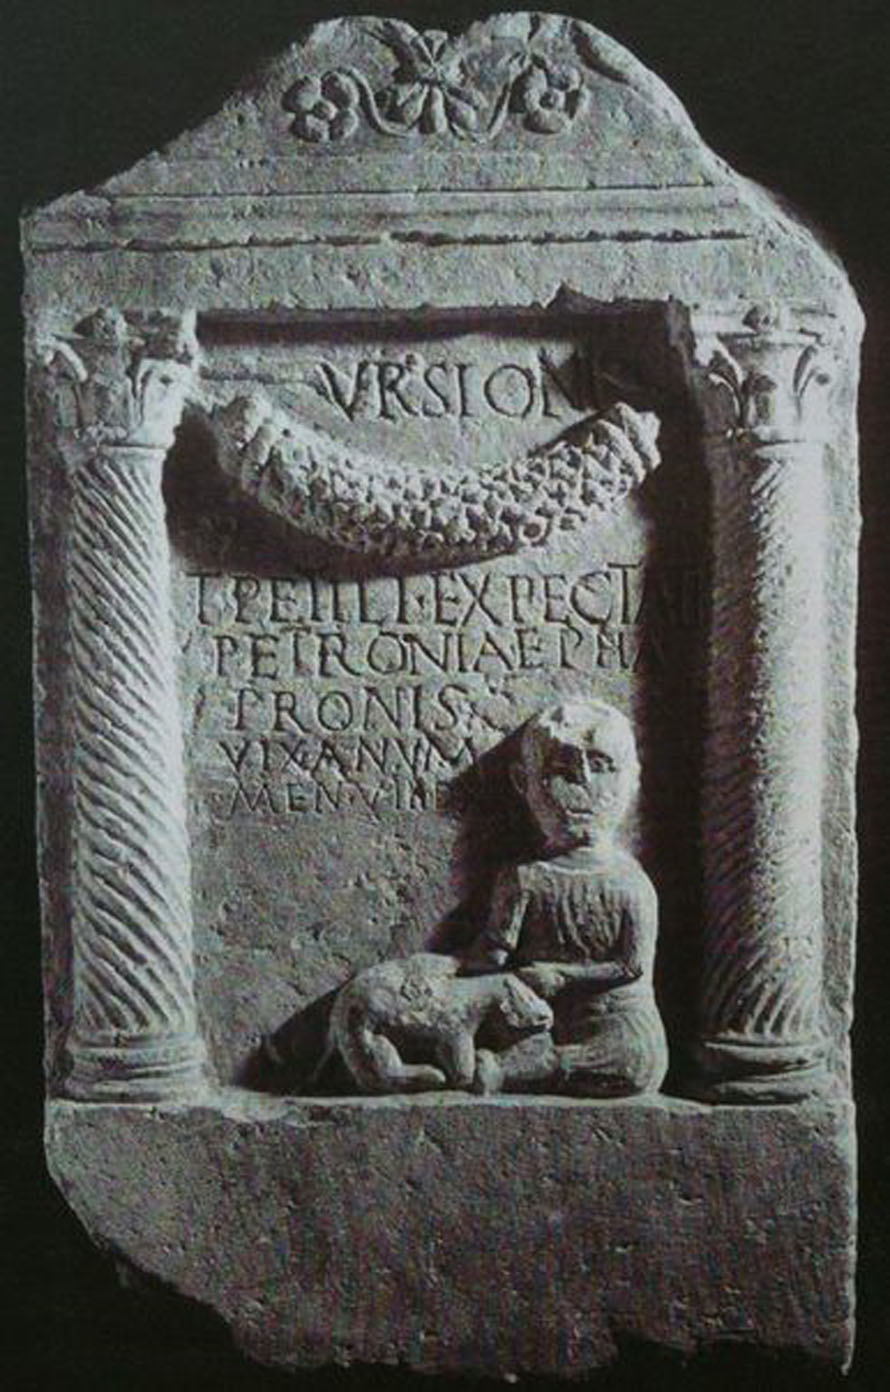 Tombstone of the child slave Urslo